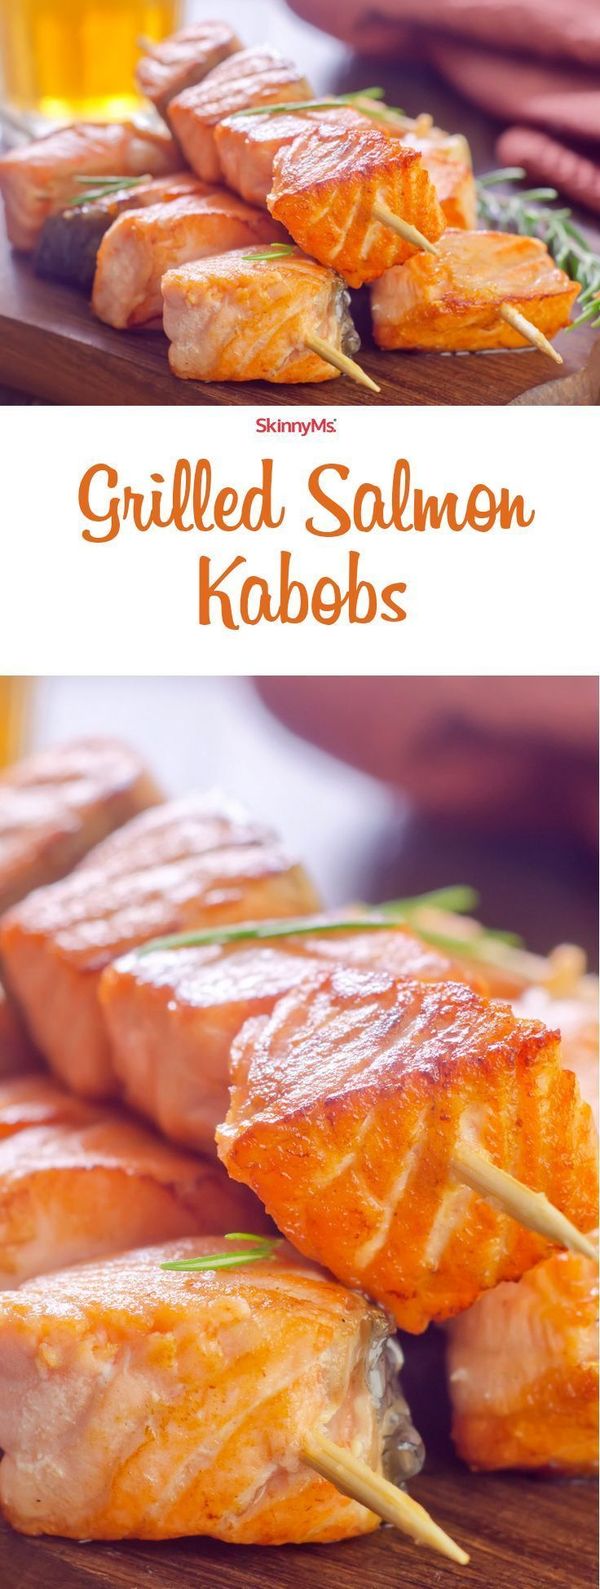 Grilled Salmon Kebobs